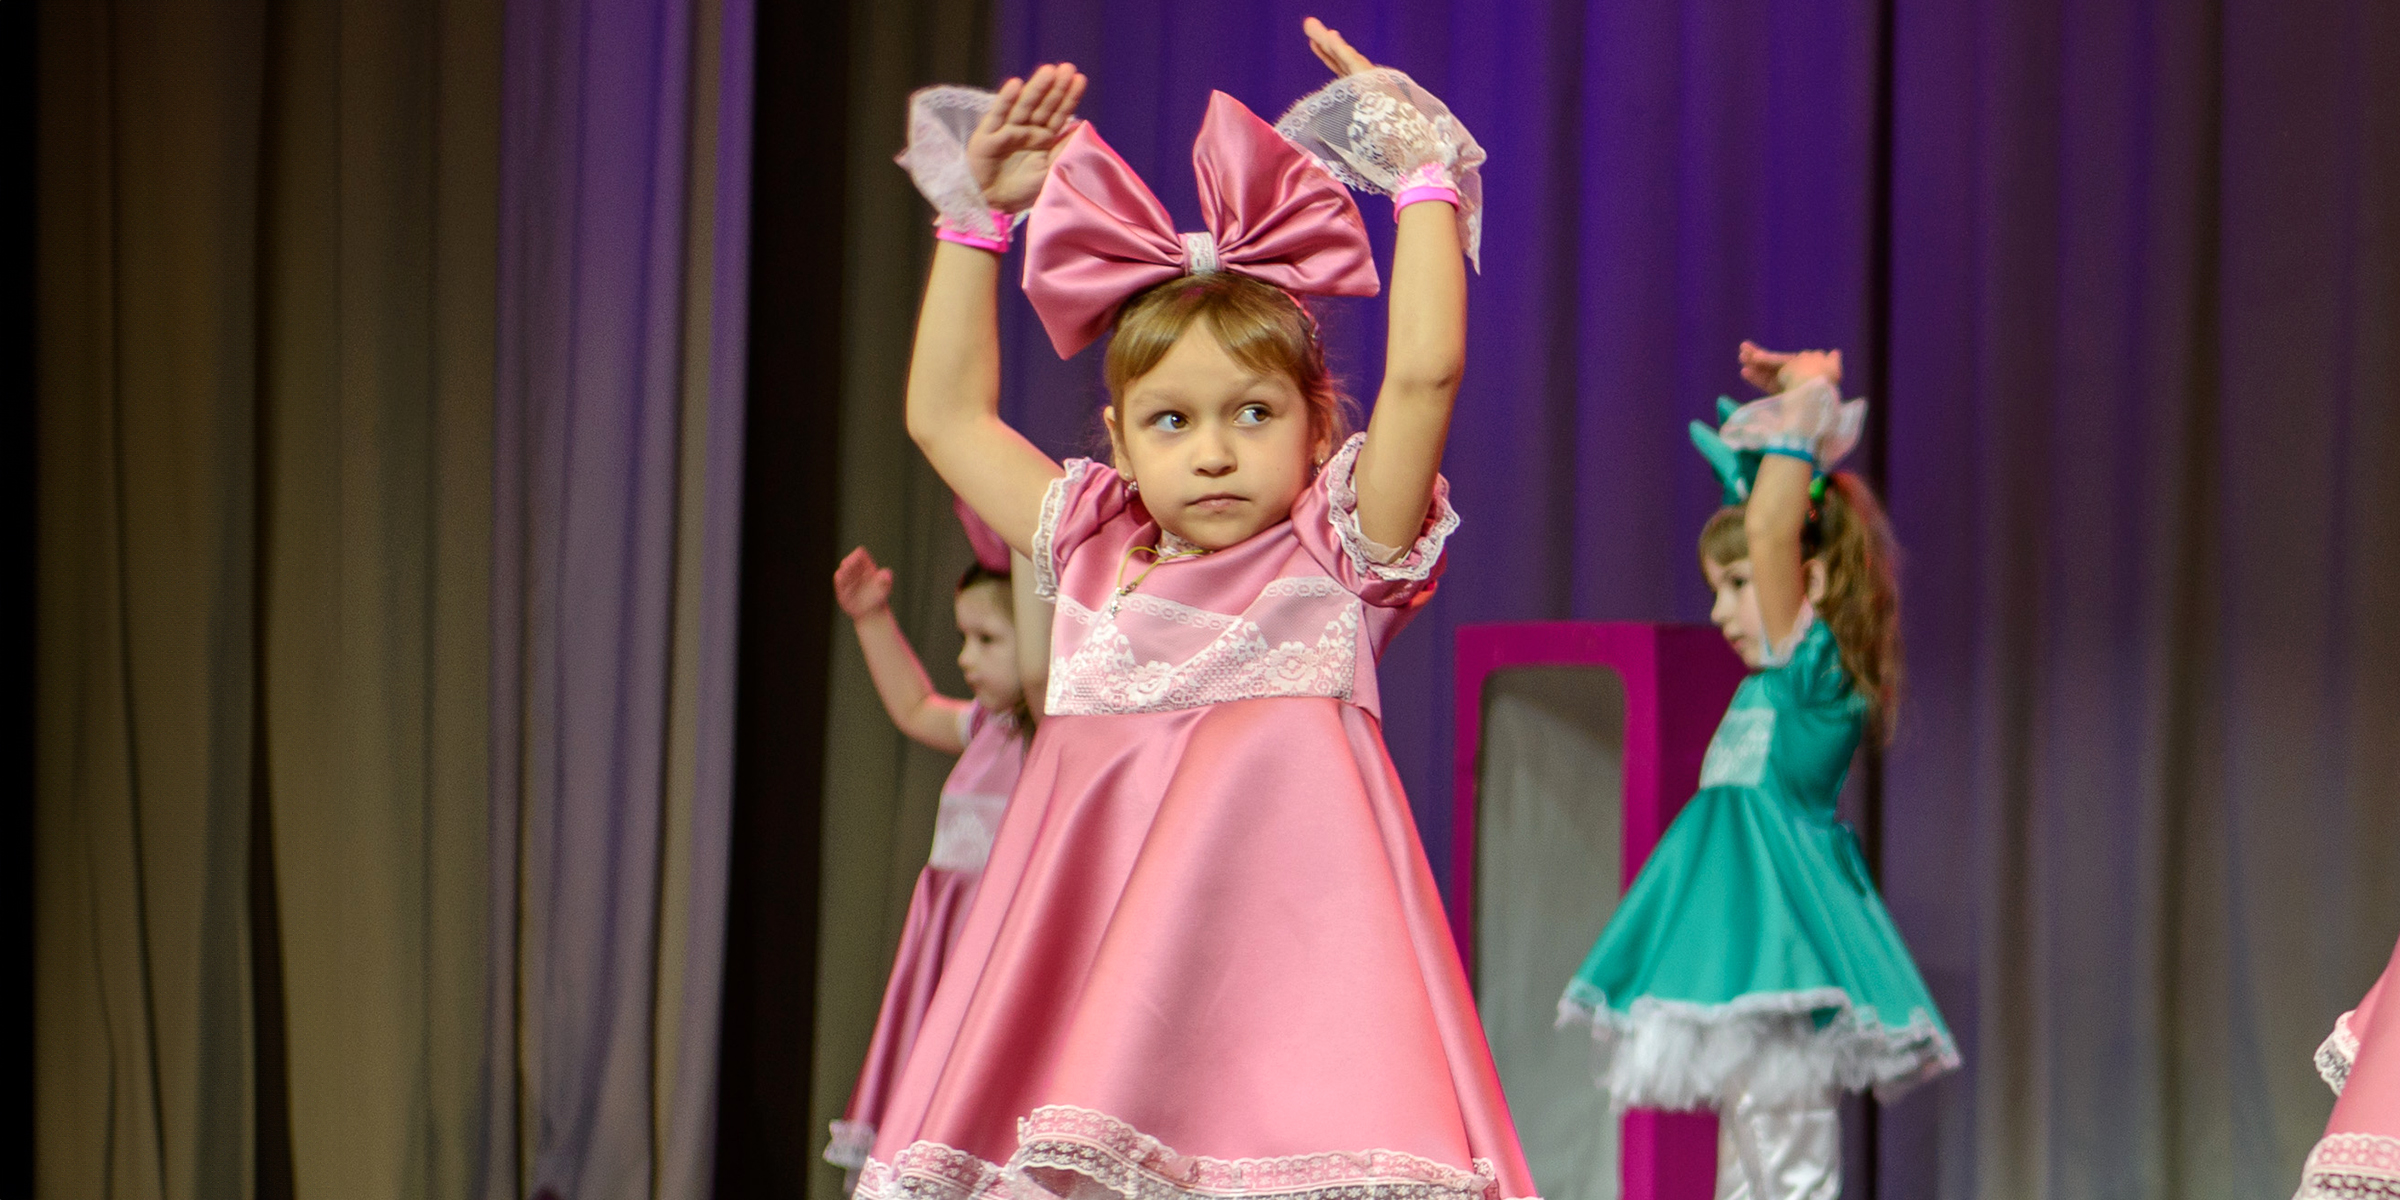 A girl performing in a dance recital | Source: Shutterstock